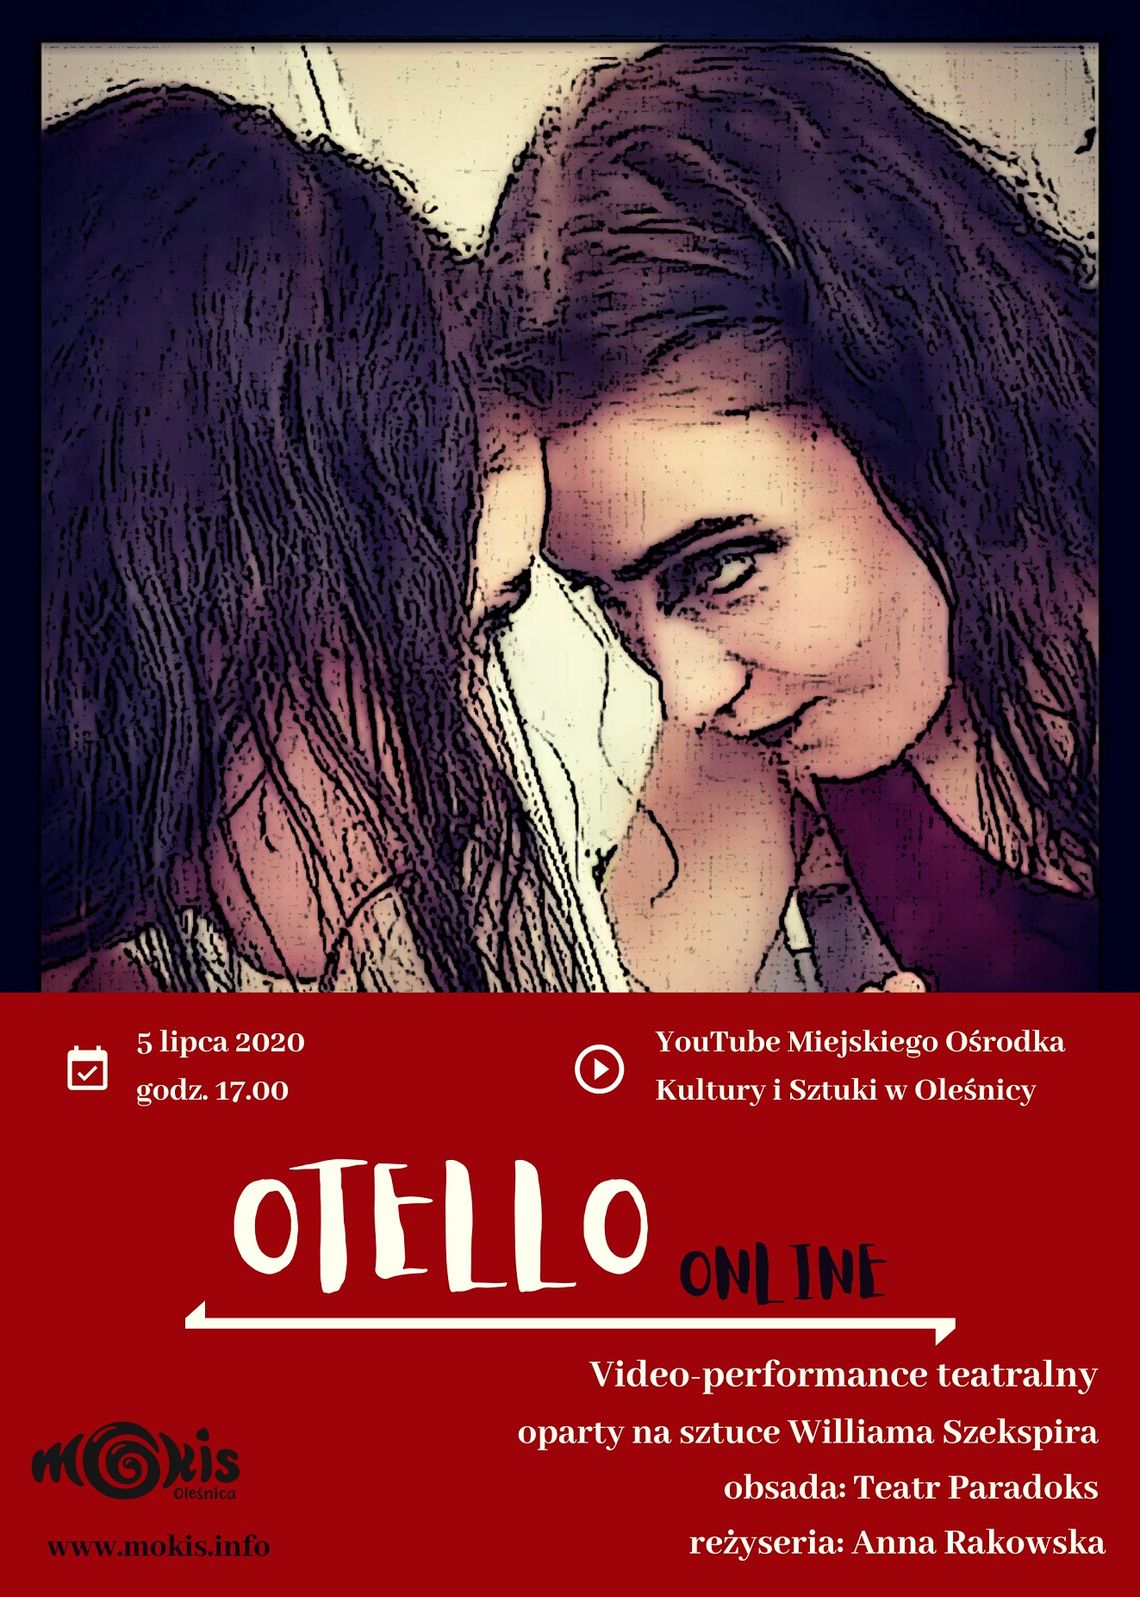 „Otello online” video-performance teatralny 